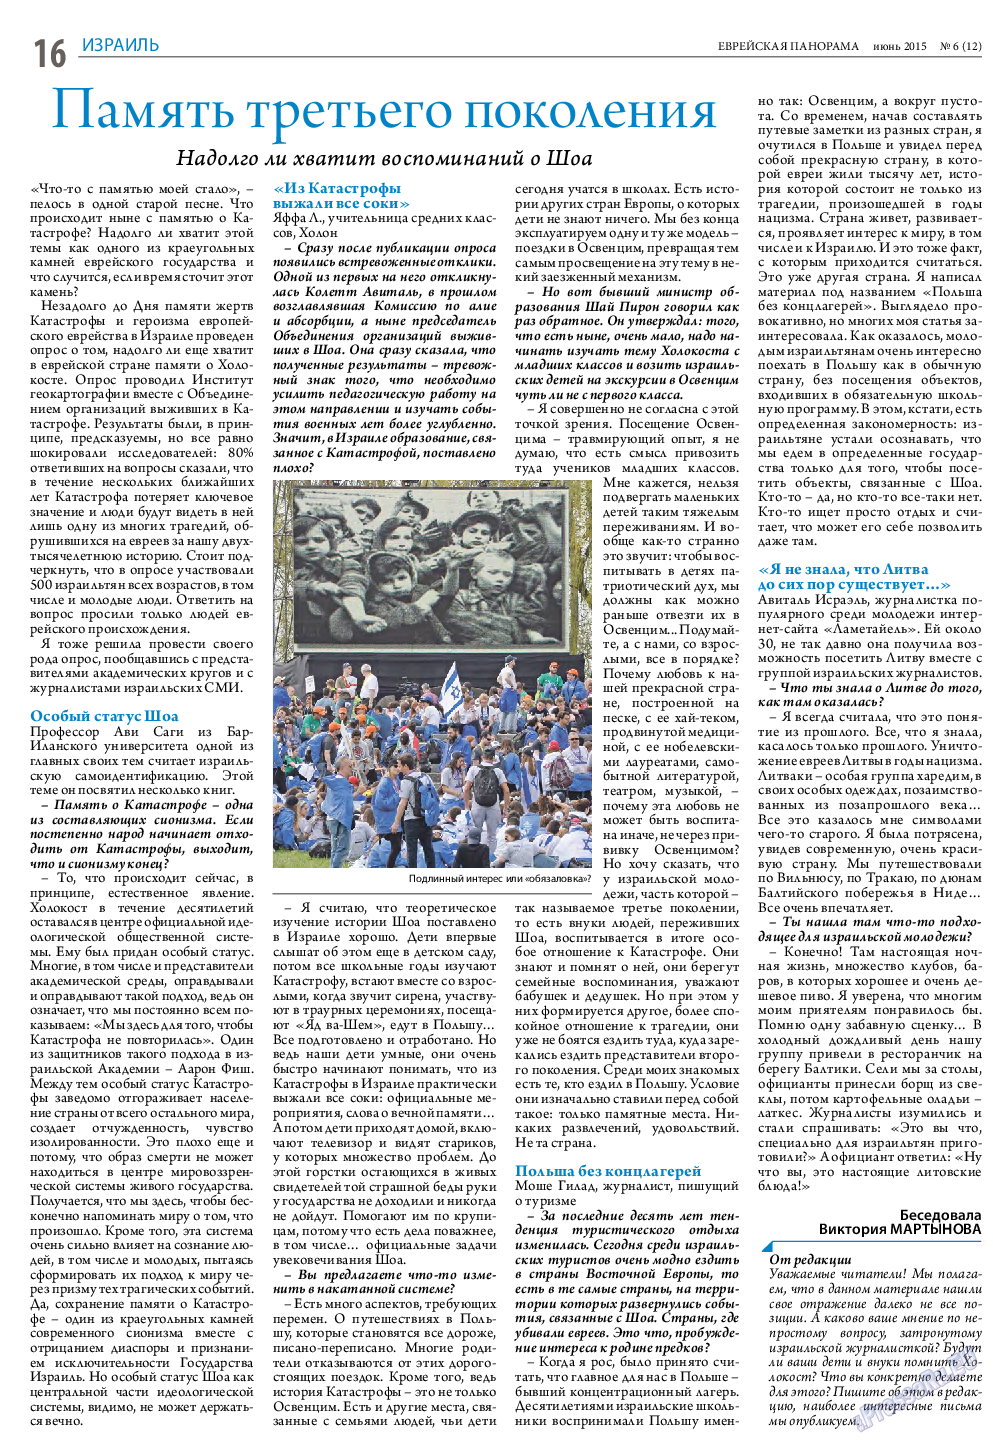 Еврейская панорама, газета. 2015 №6 стр.16